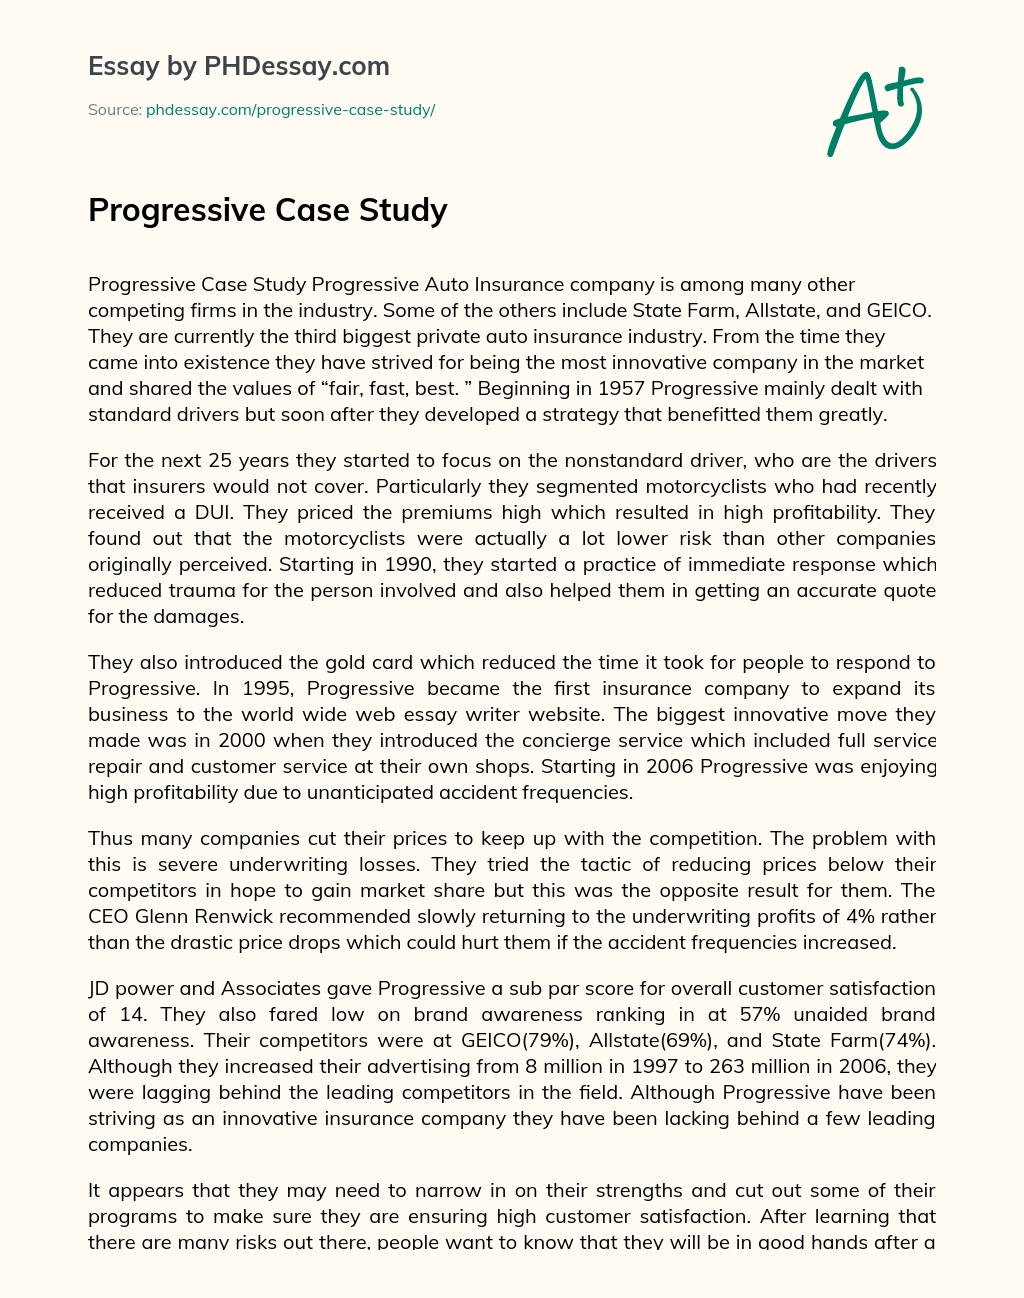 Progressive Case Study essay